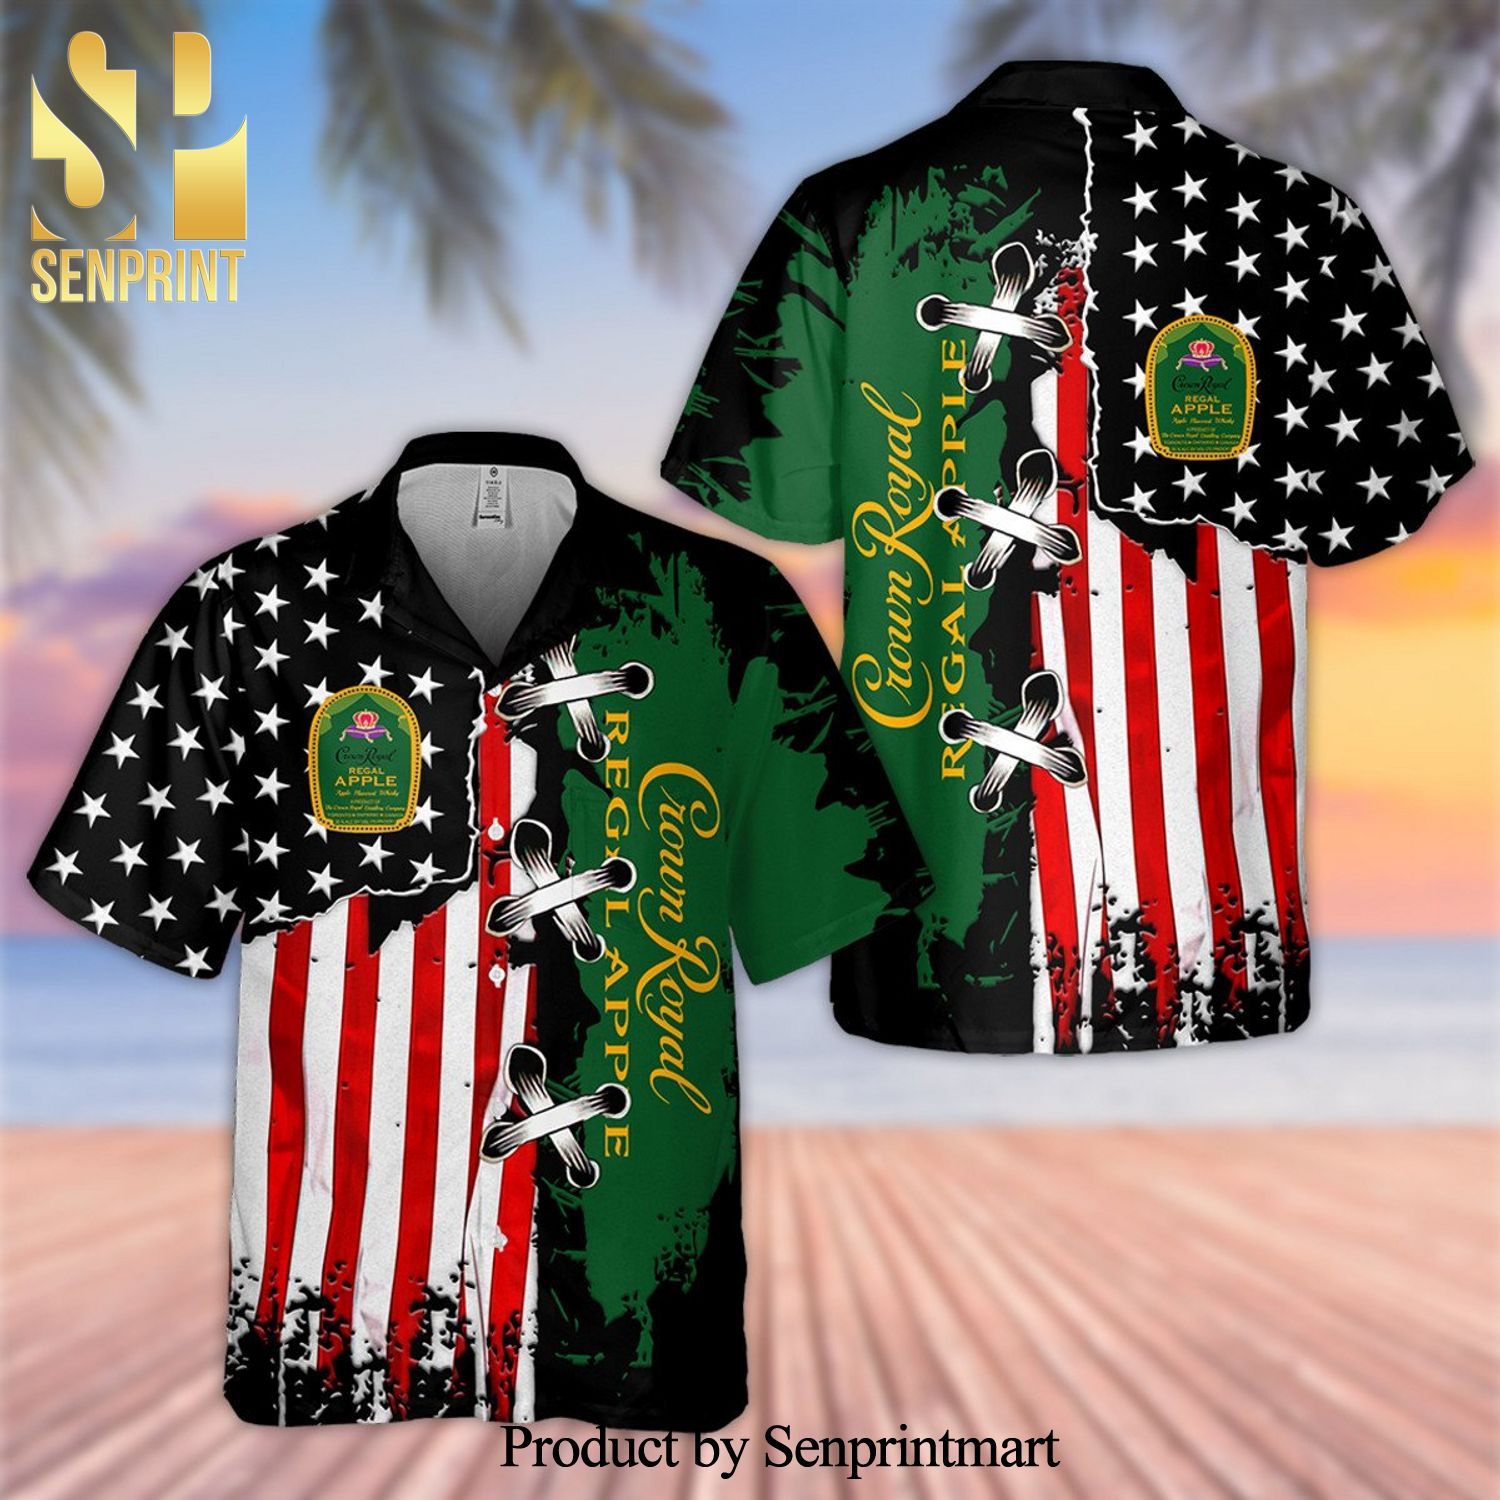 Crown Royal Regal Apple USA Flag Full Printing Aloha Summer Beach Hawaiian Shirt – Black Green